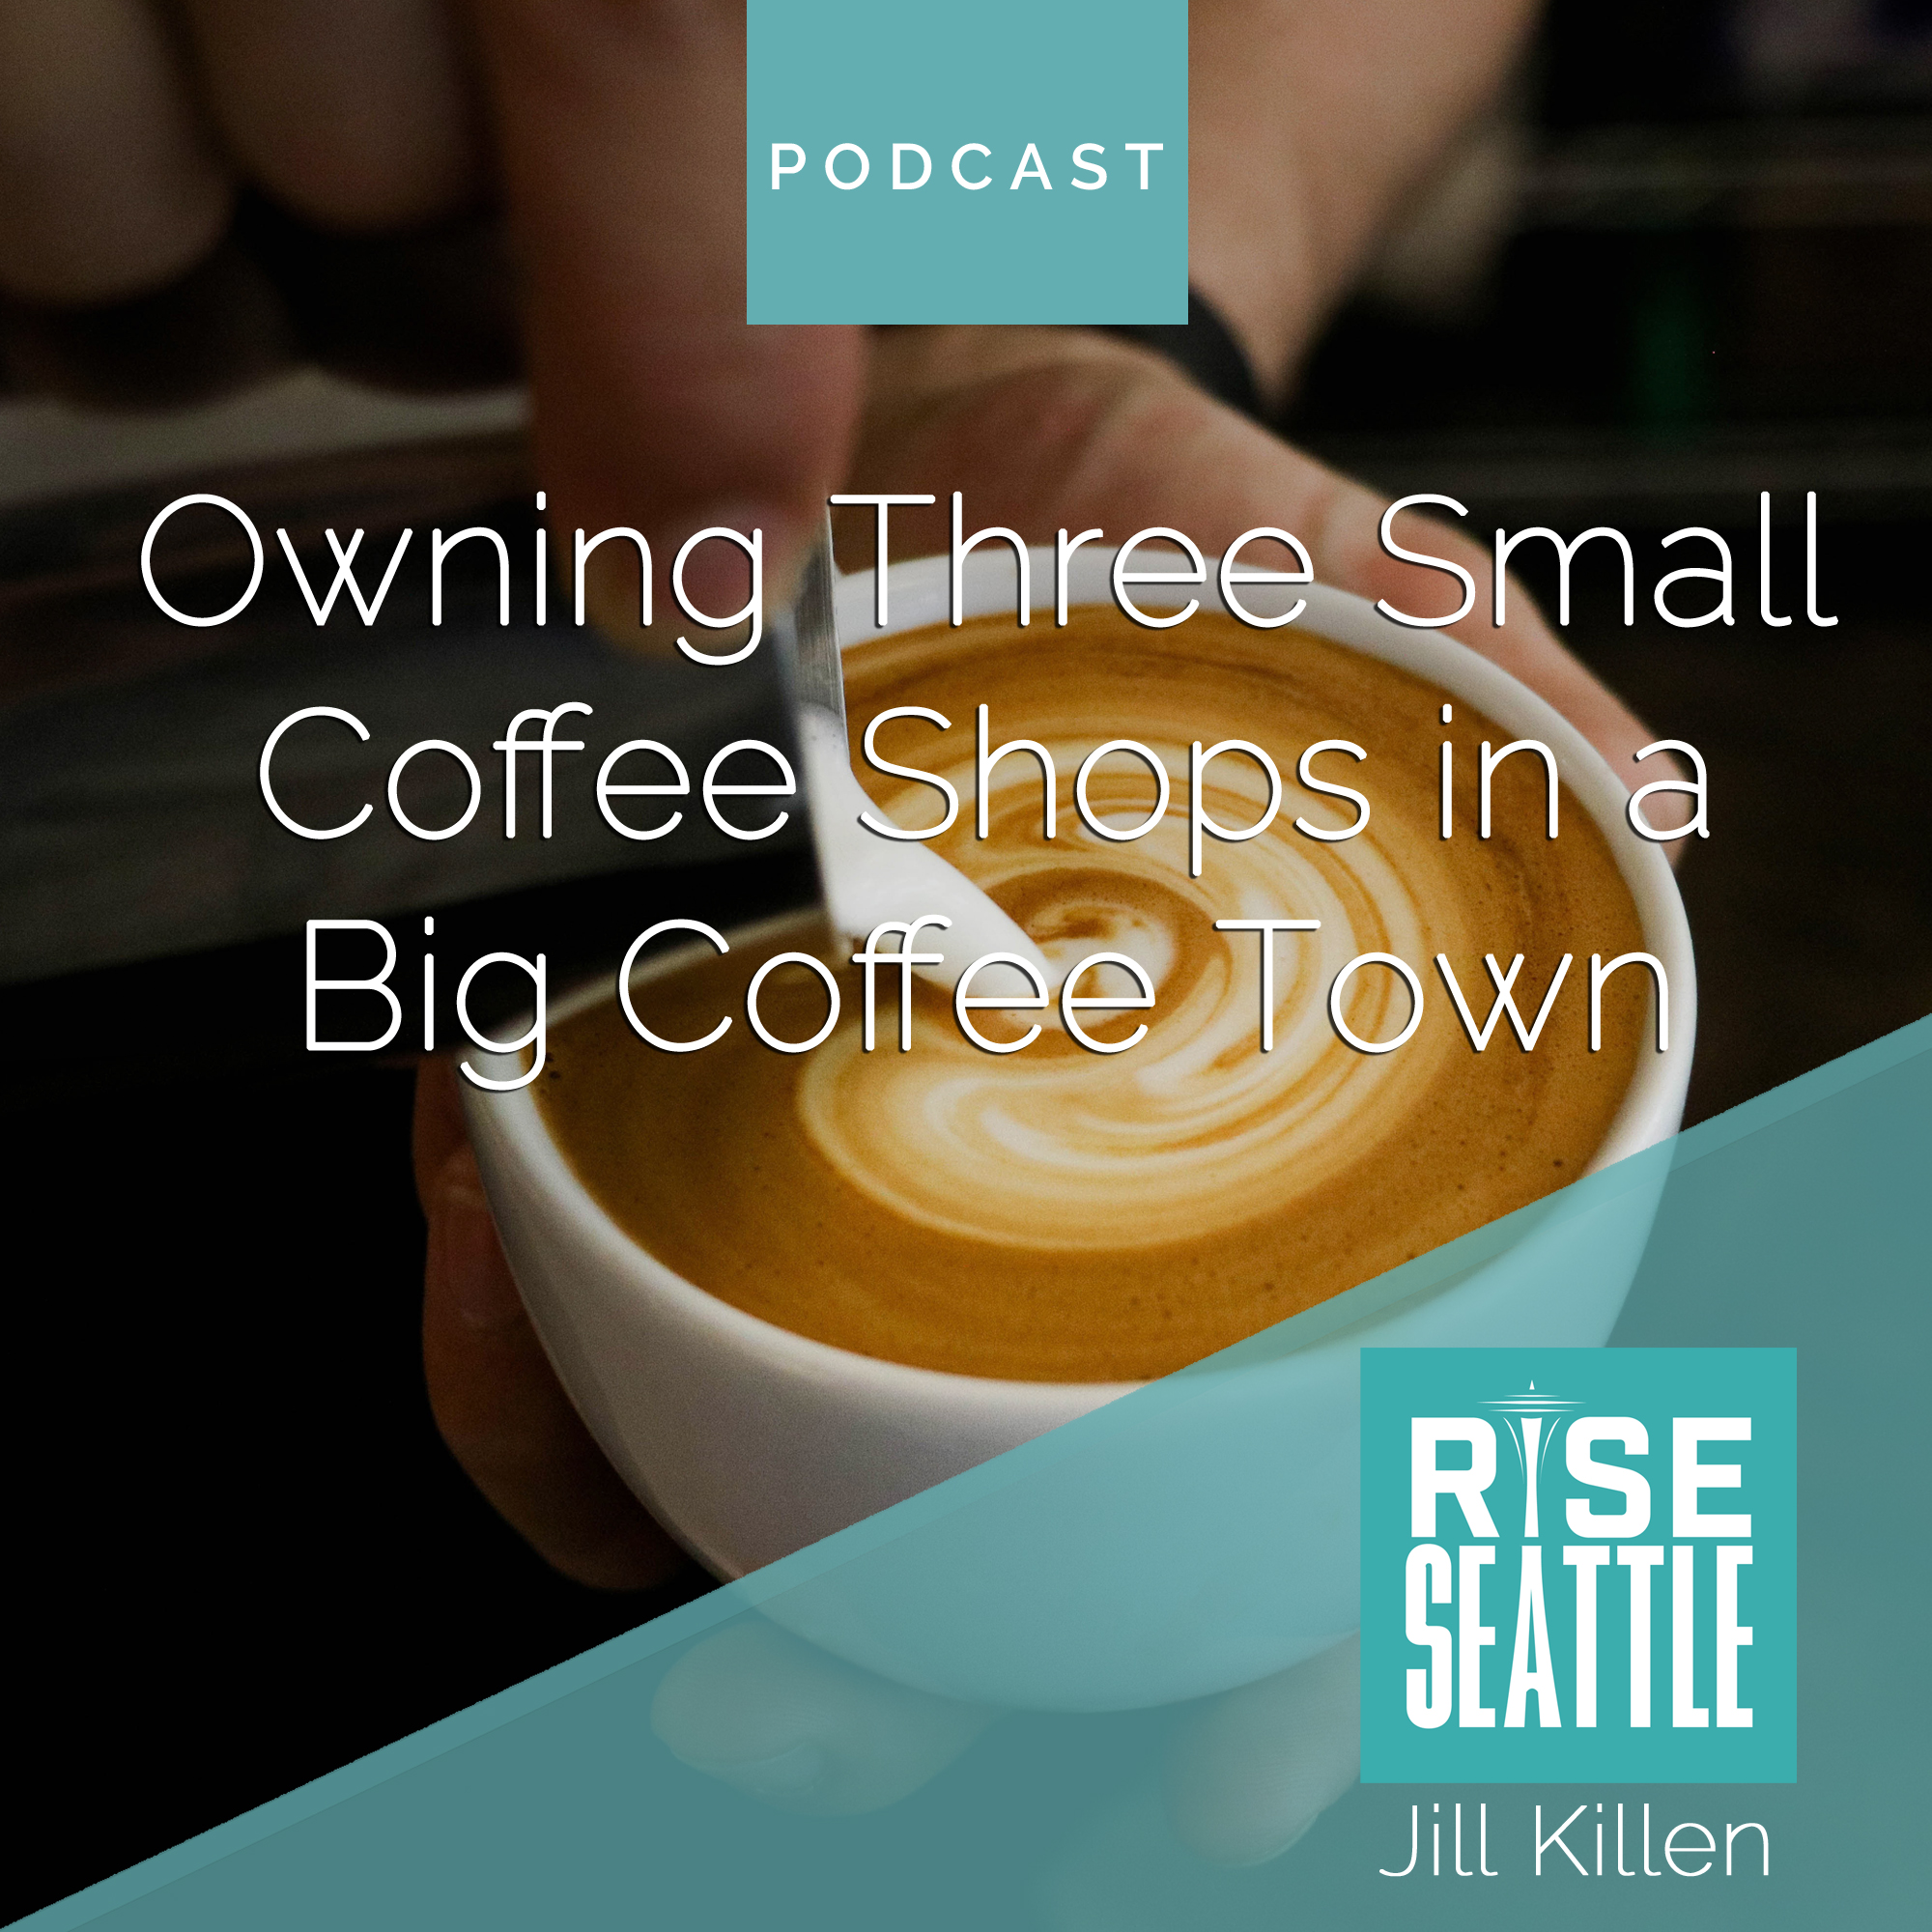 S1.E8. Jill Killen: Running Three Small Coffee Shops in a Big Coffee Town